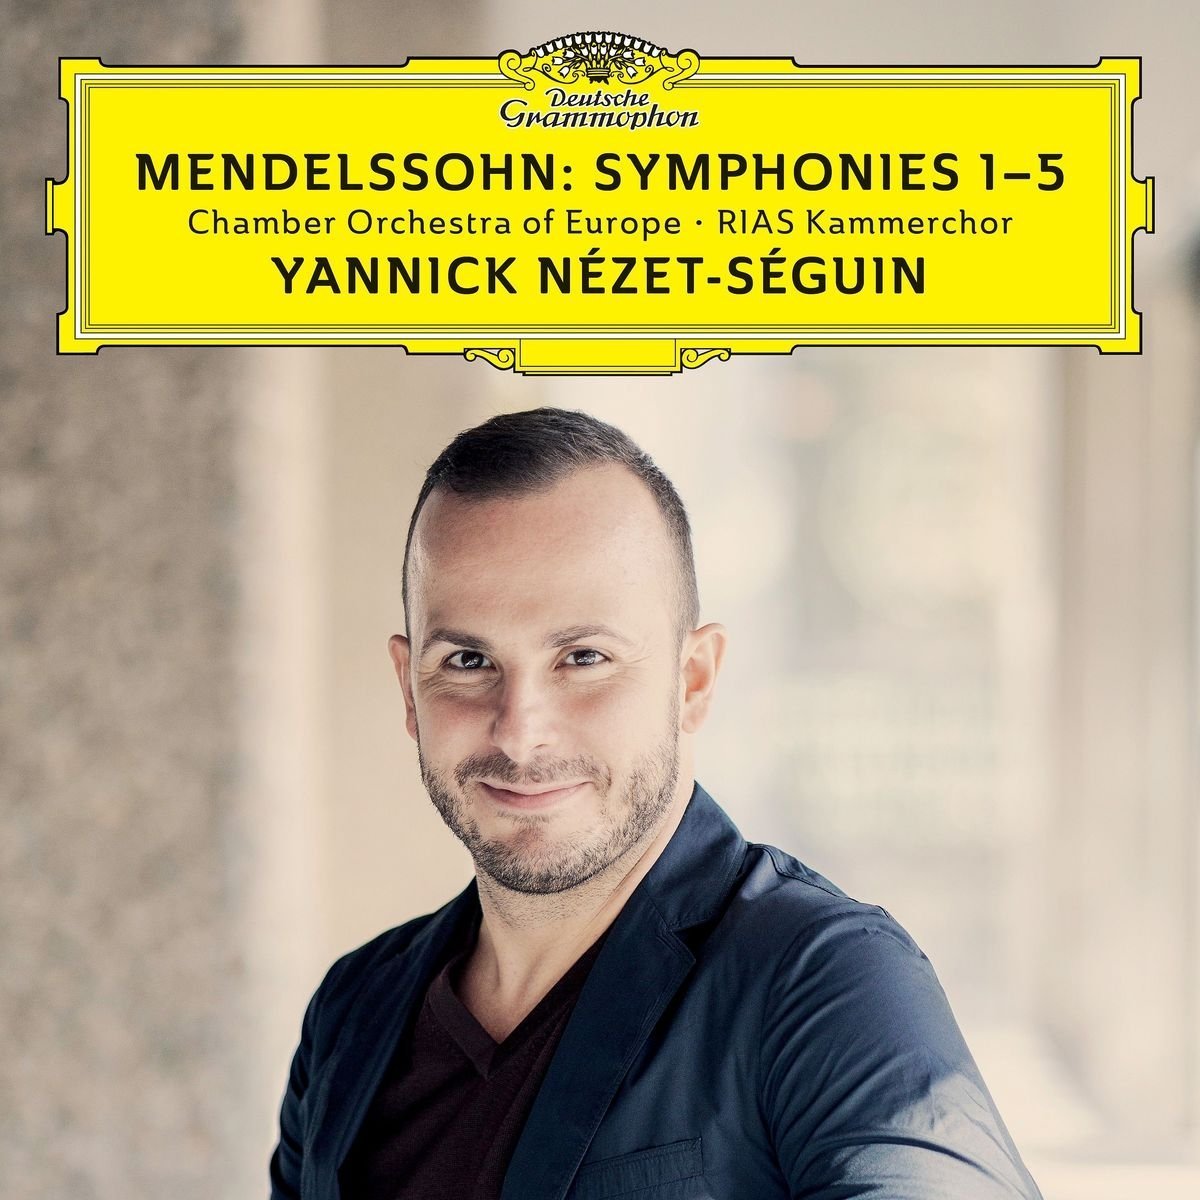 Chamber Orchestra of Europe, Yannick Nezet-Seguin & RIAS Kammerchor - Mendelssohn Symphonies Nos. 1-5 (Live) (2017) [Qobuz FLAC 24bit/96kHz]